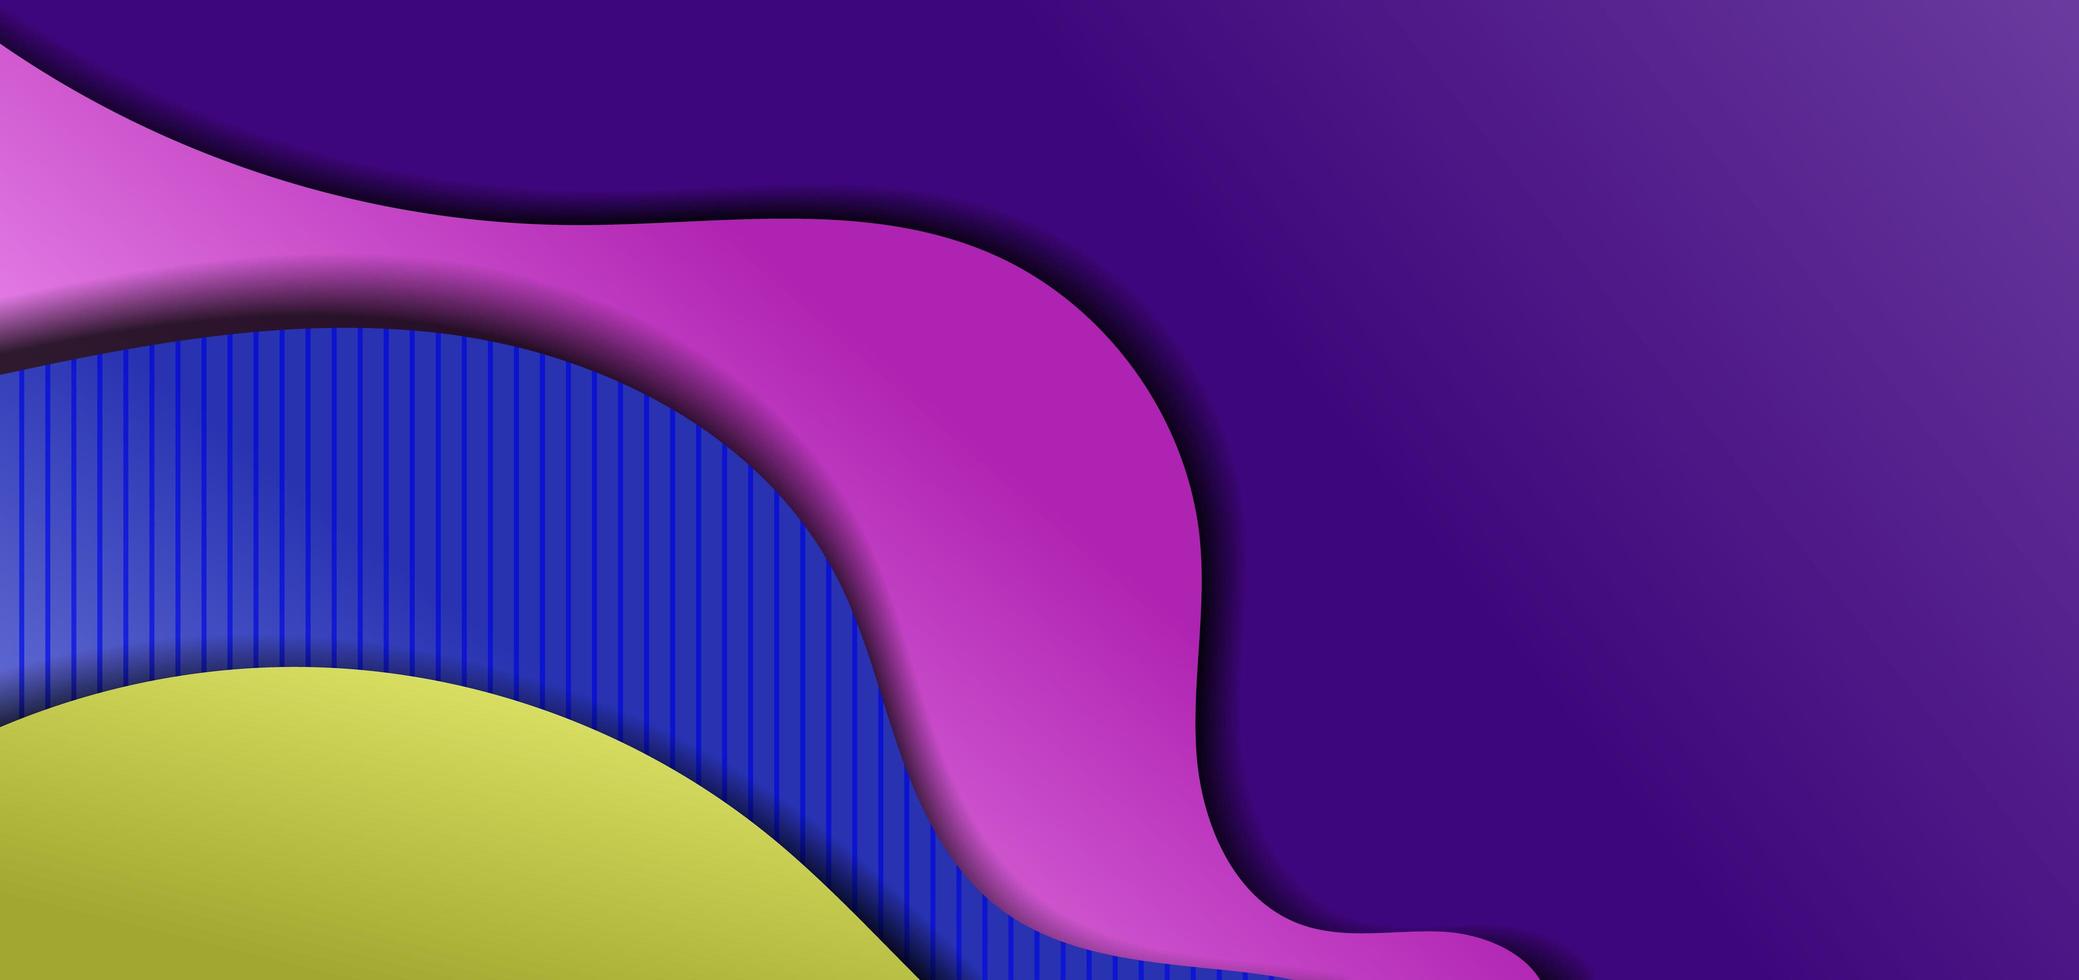 fundo abstrato com ondas coloridas vetor